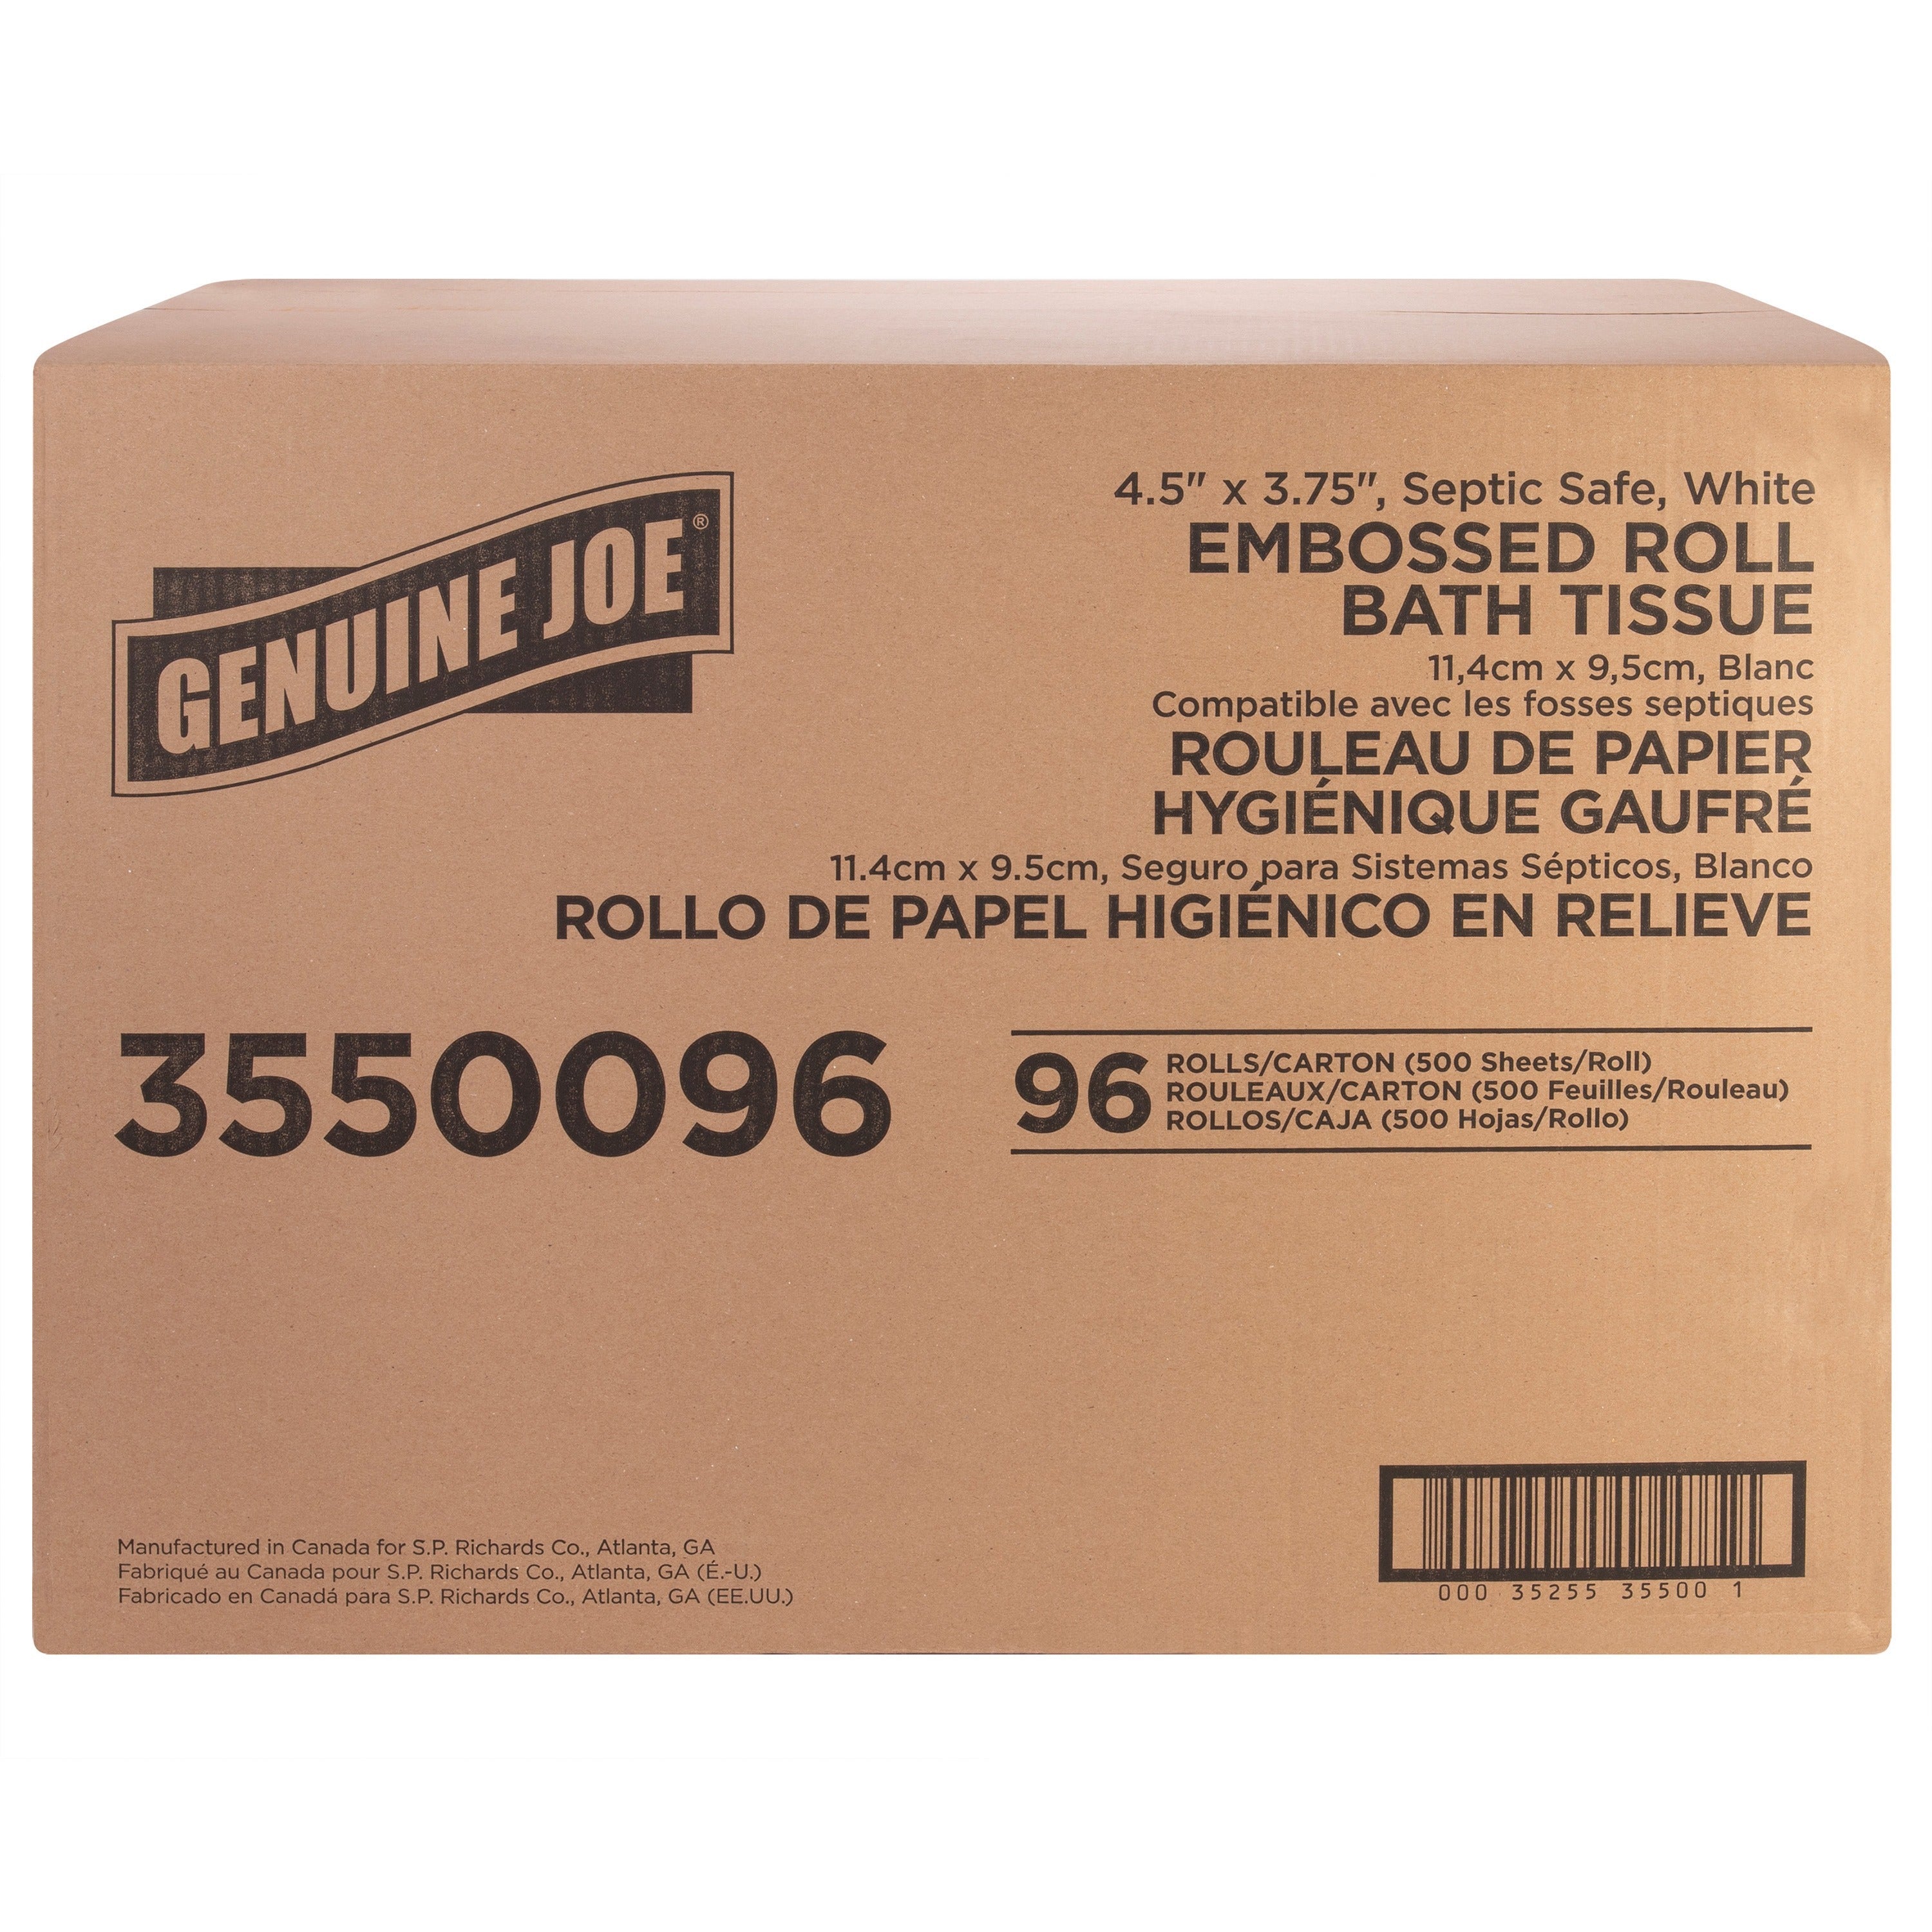 genuine-joe-2-ply-bath-tissue-2-ply-450-x-380-500-sheets-roll-white-fiber-perforated-absorbent-soft-for-bathroom-restroom-96-carton_gjo3550096 - 2